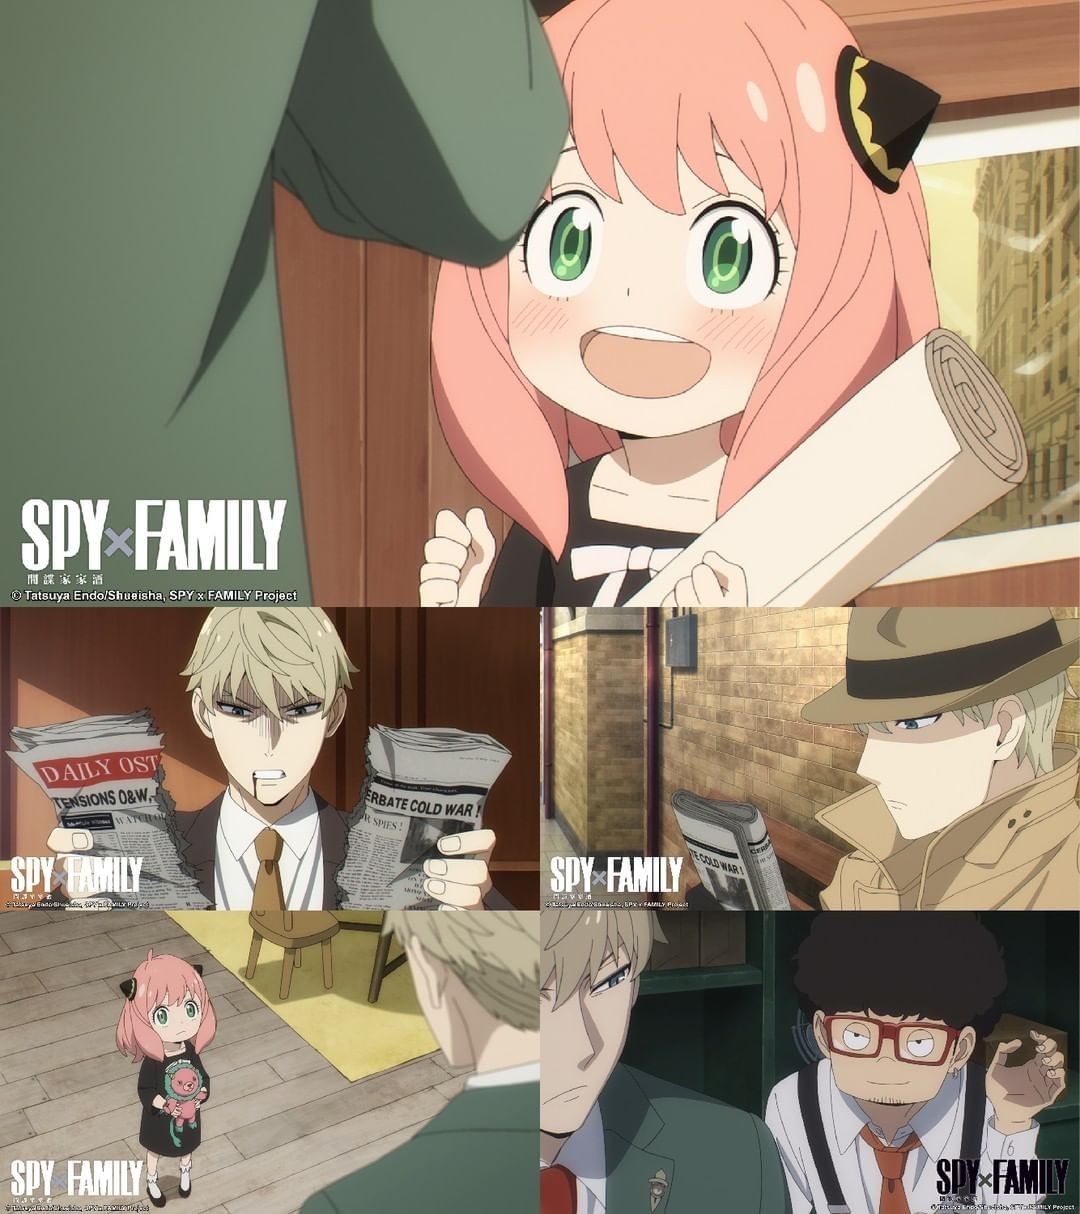 Animes In Japan 🎄 on X: INFO O primeiro episódio dublado em português do  anime de SPY x FAMILY já está disponível na Crunchyroll Brasil.   / X